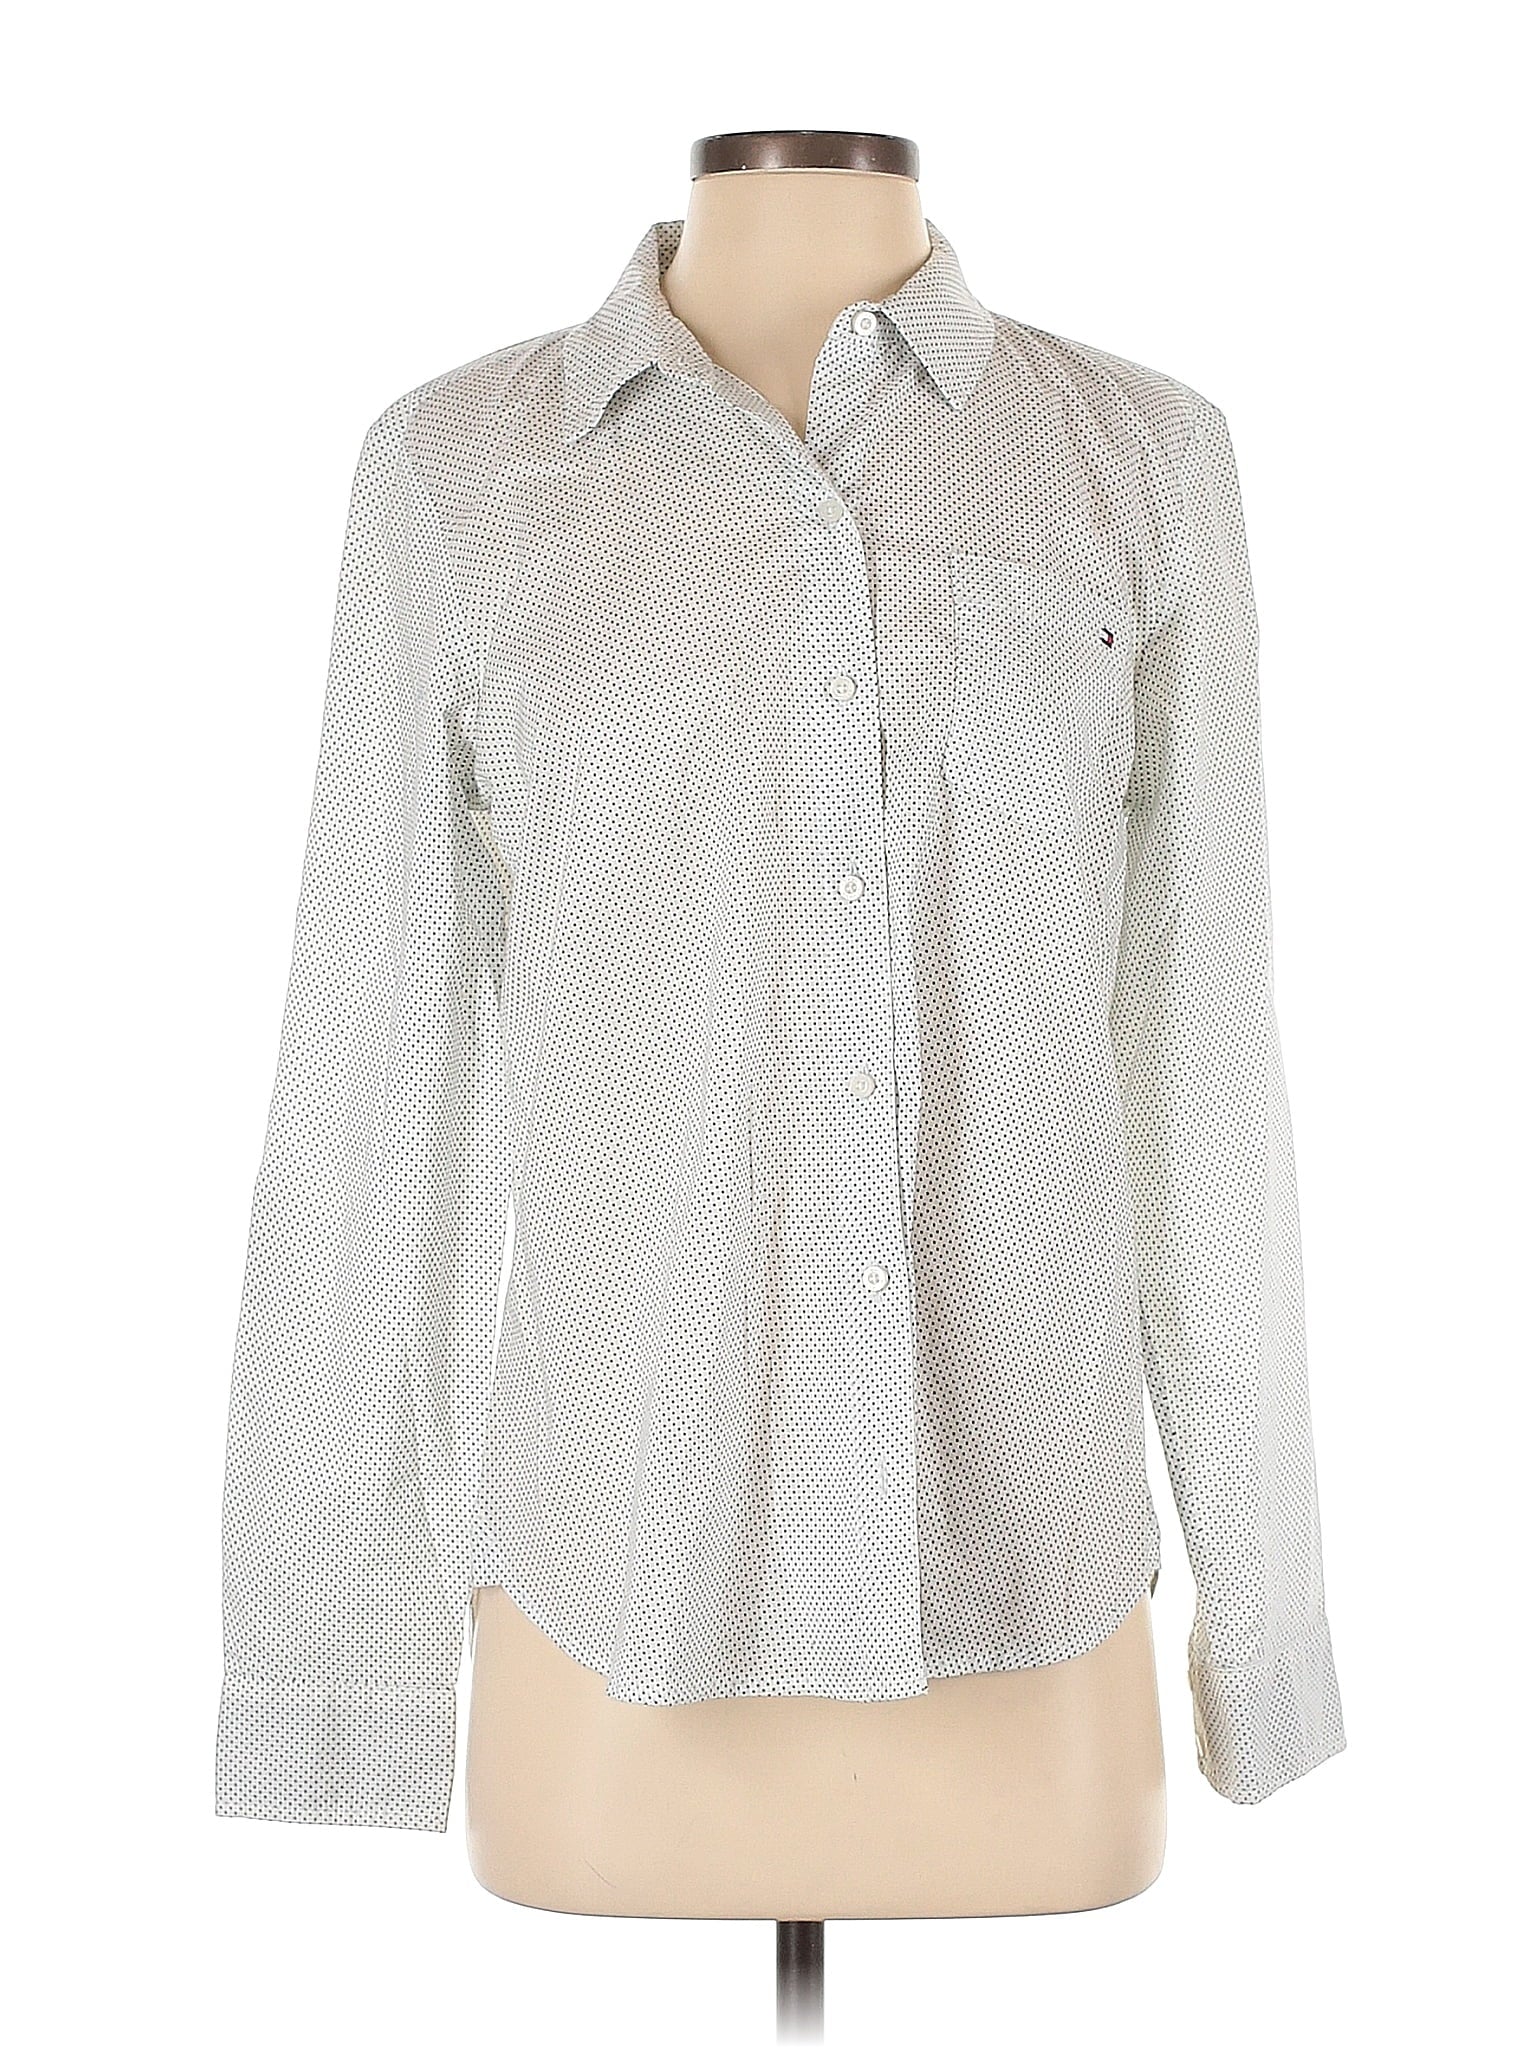 Long Sleeve Button Down Shirt size - S